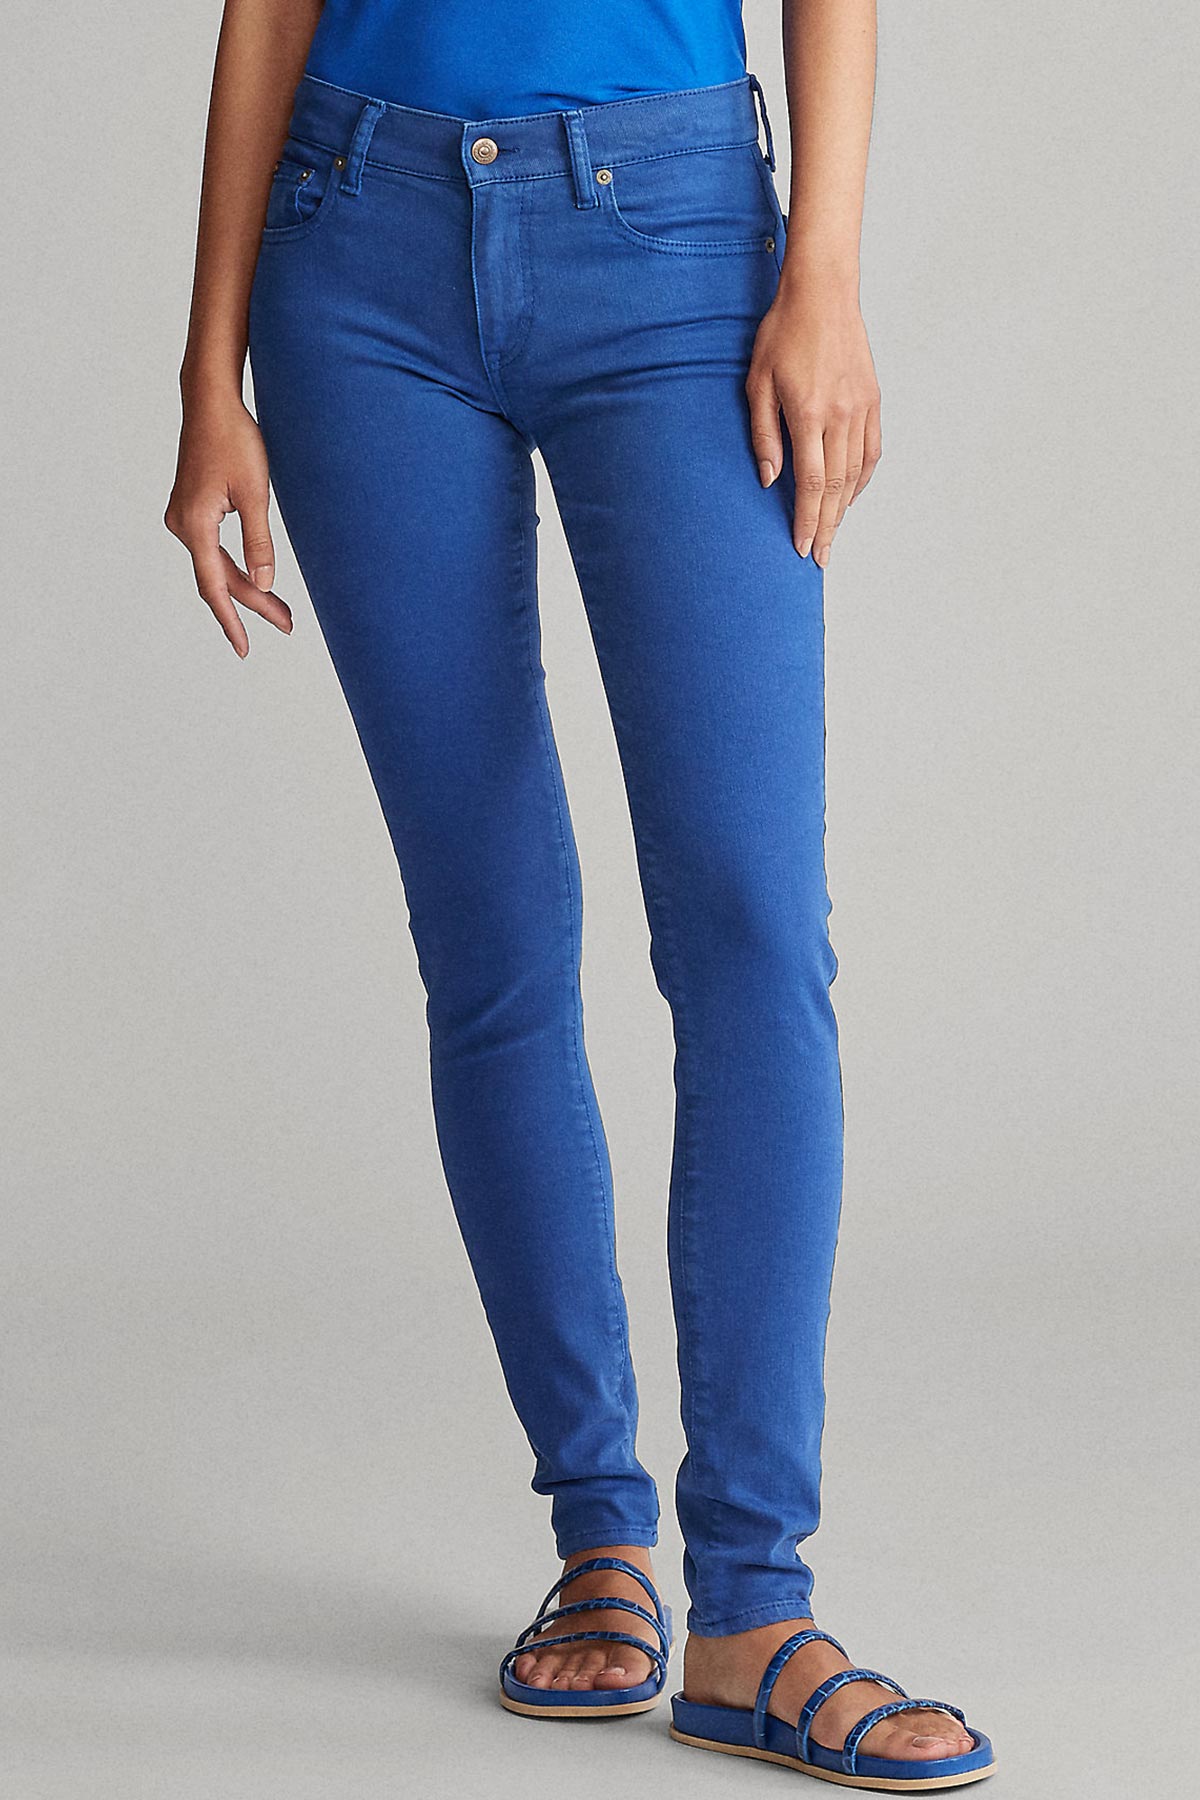 Polo Ralph Lauren The Tompkins Skinny Jeans-Libas Trendy Fashion Store